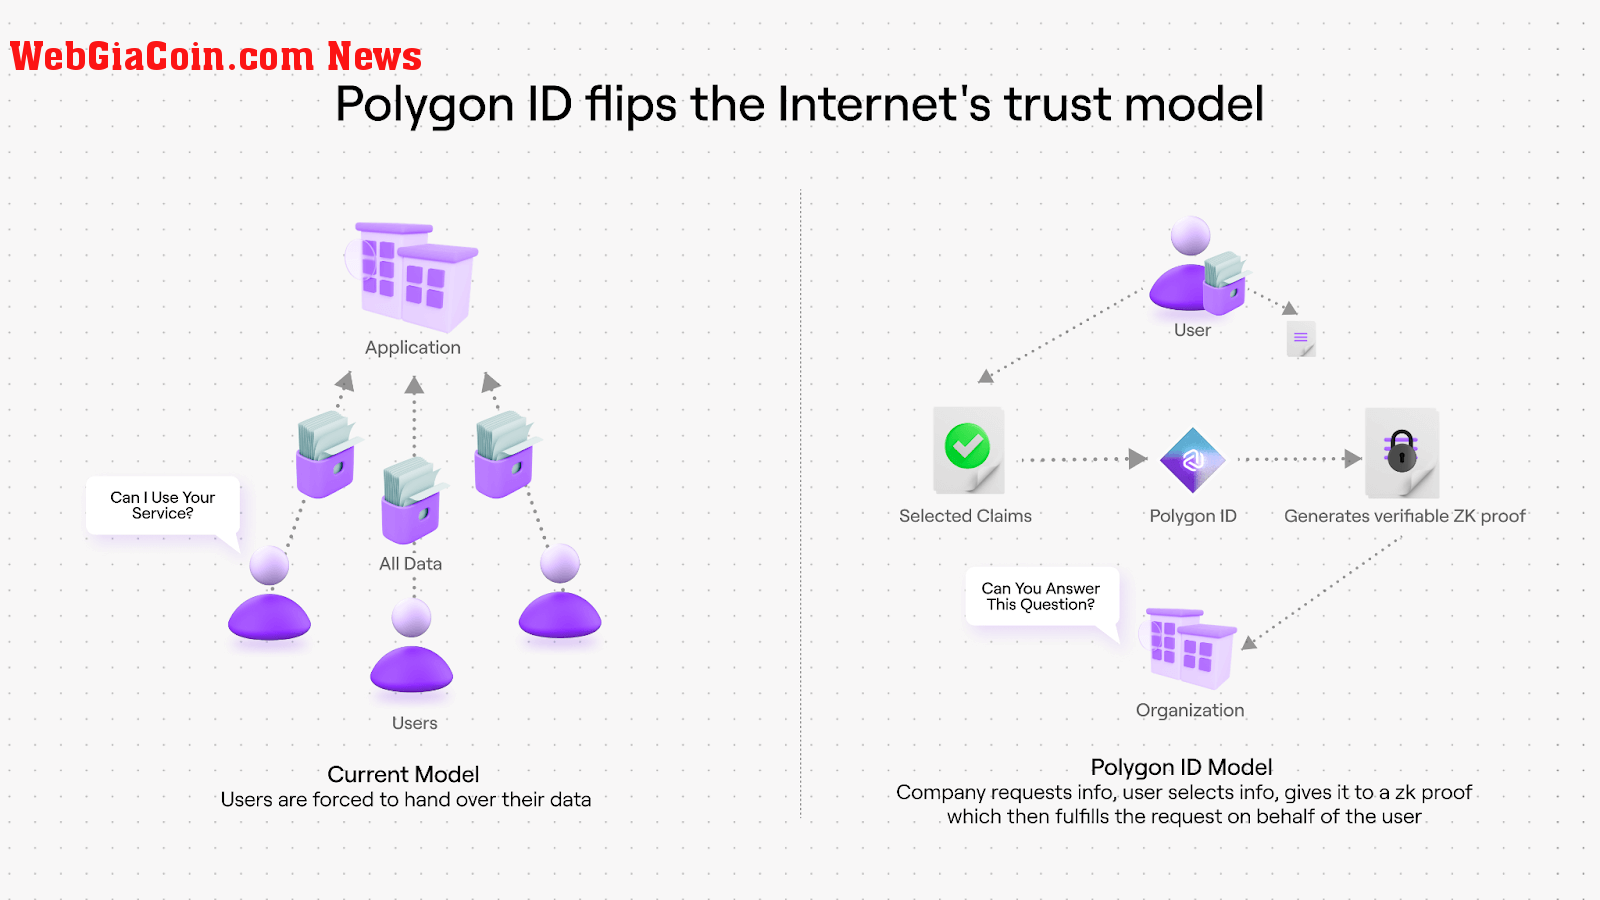 Polygon ID model for identity verification